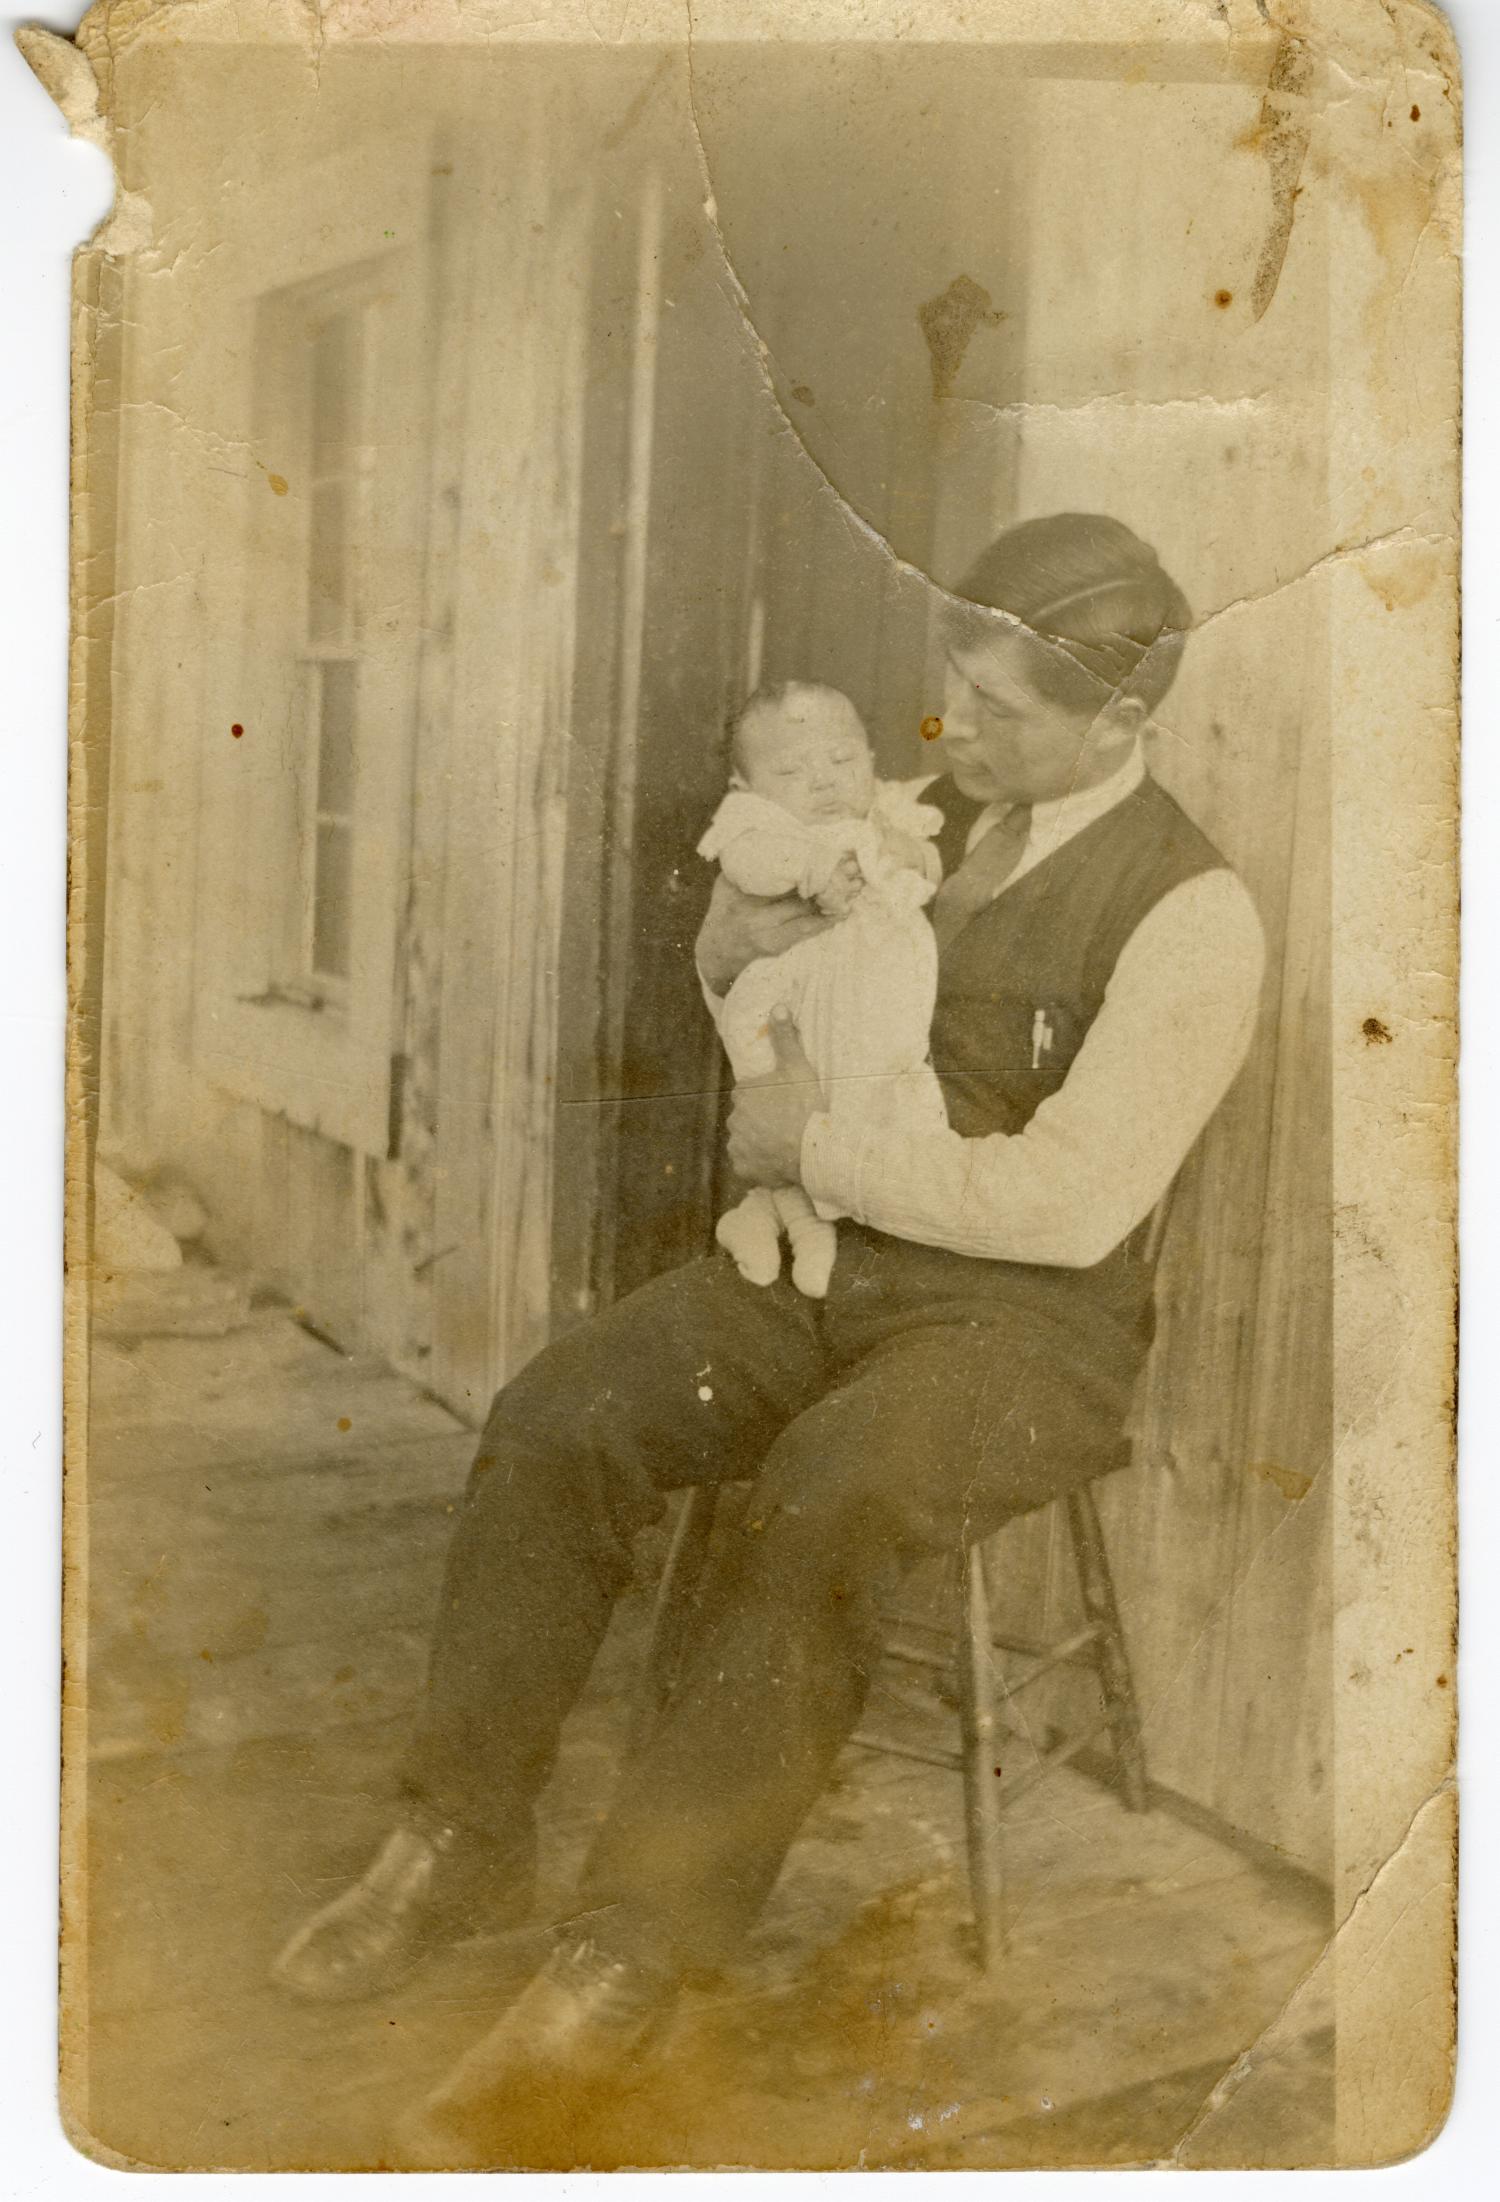 Jack Joseph holding his son, Frank Joseph.